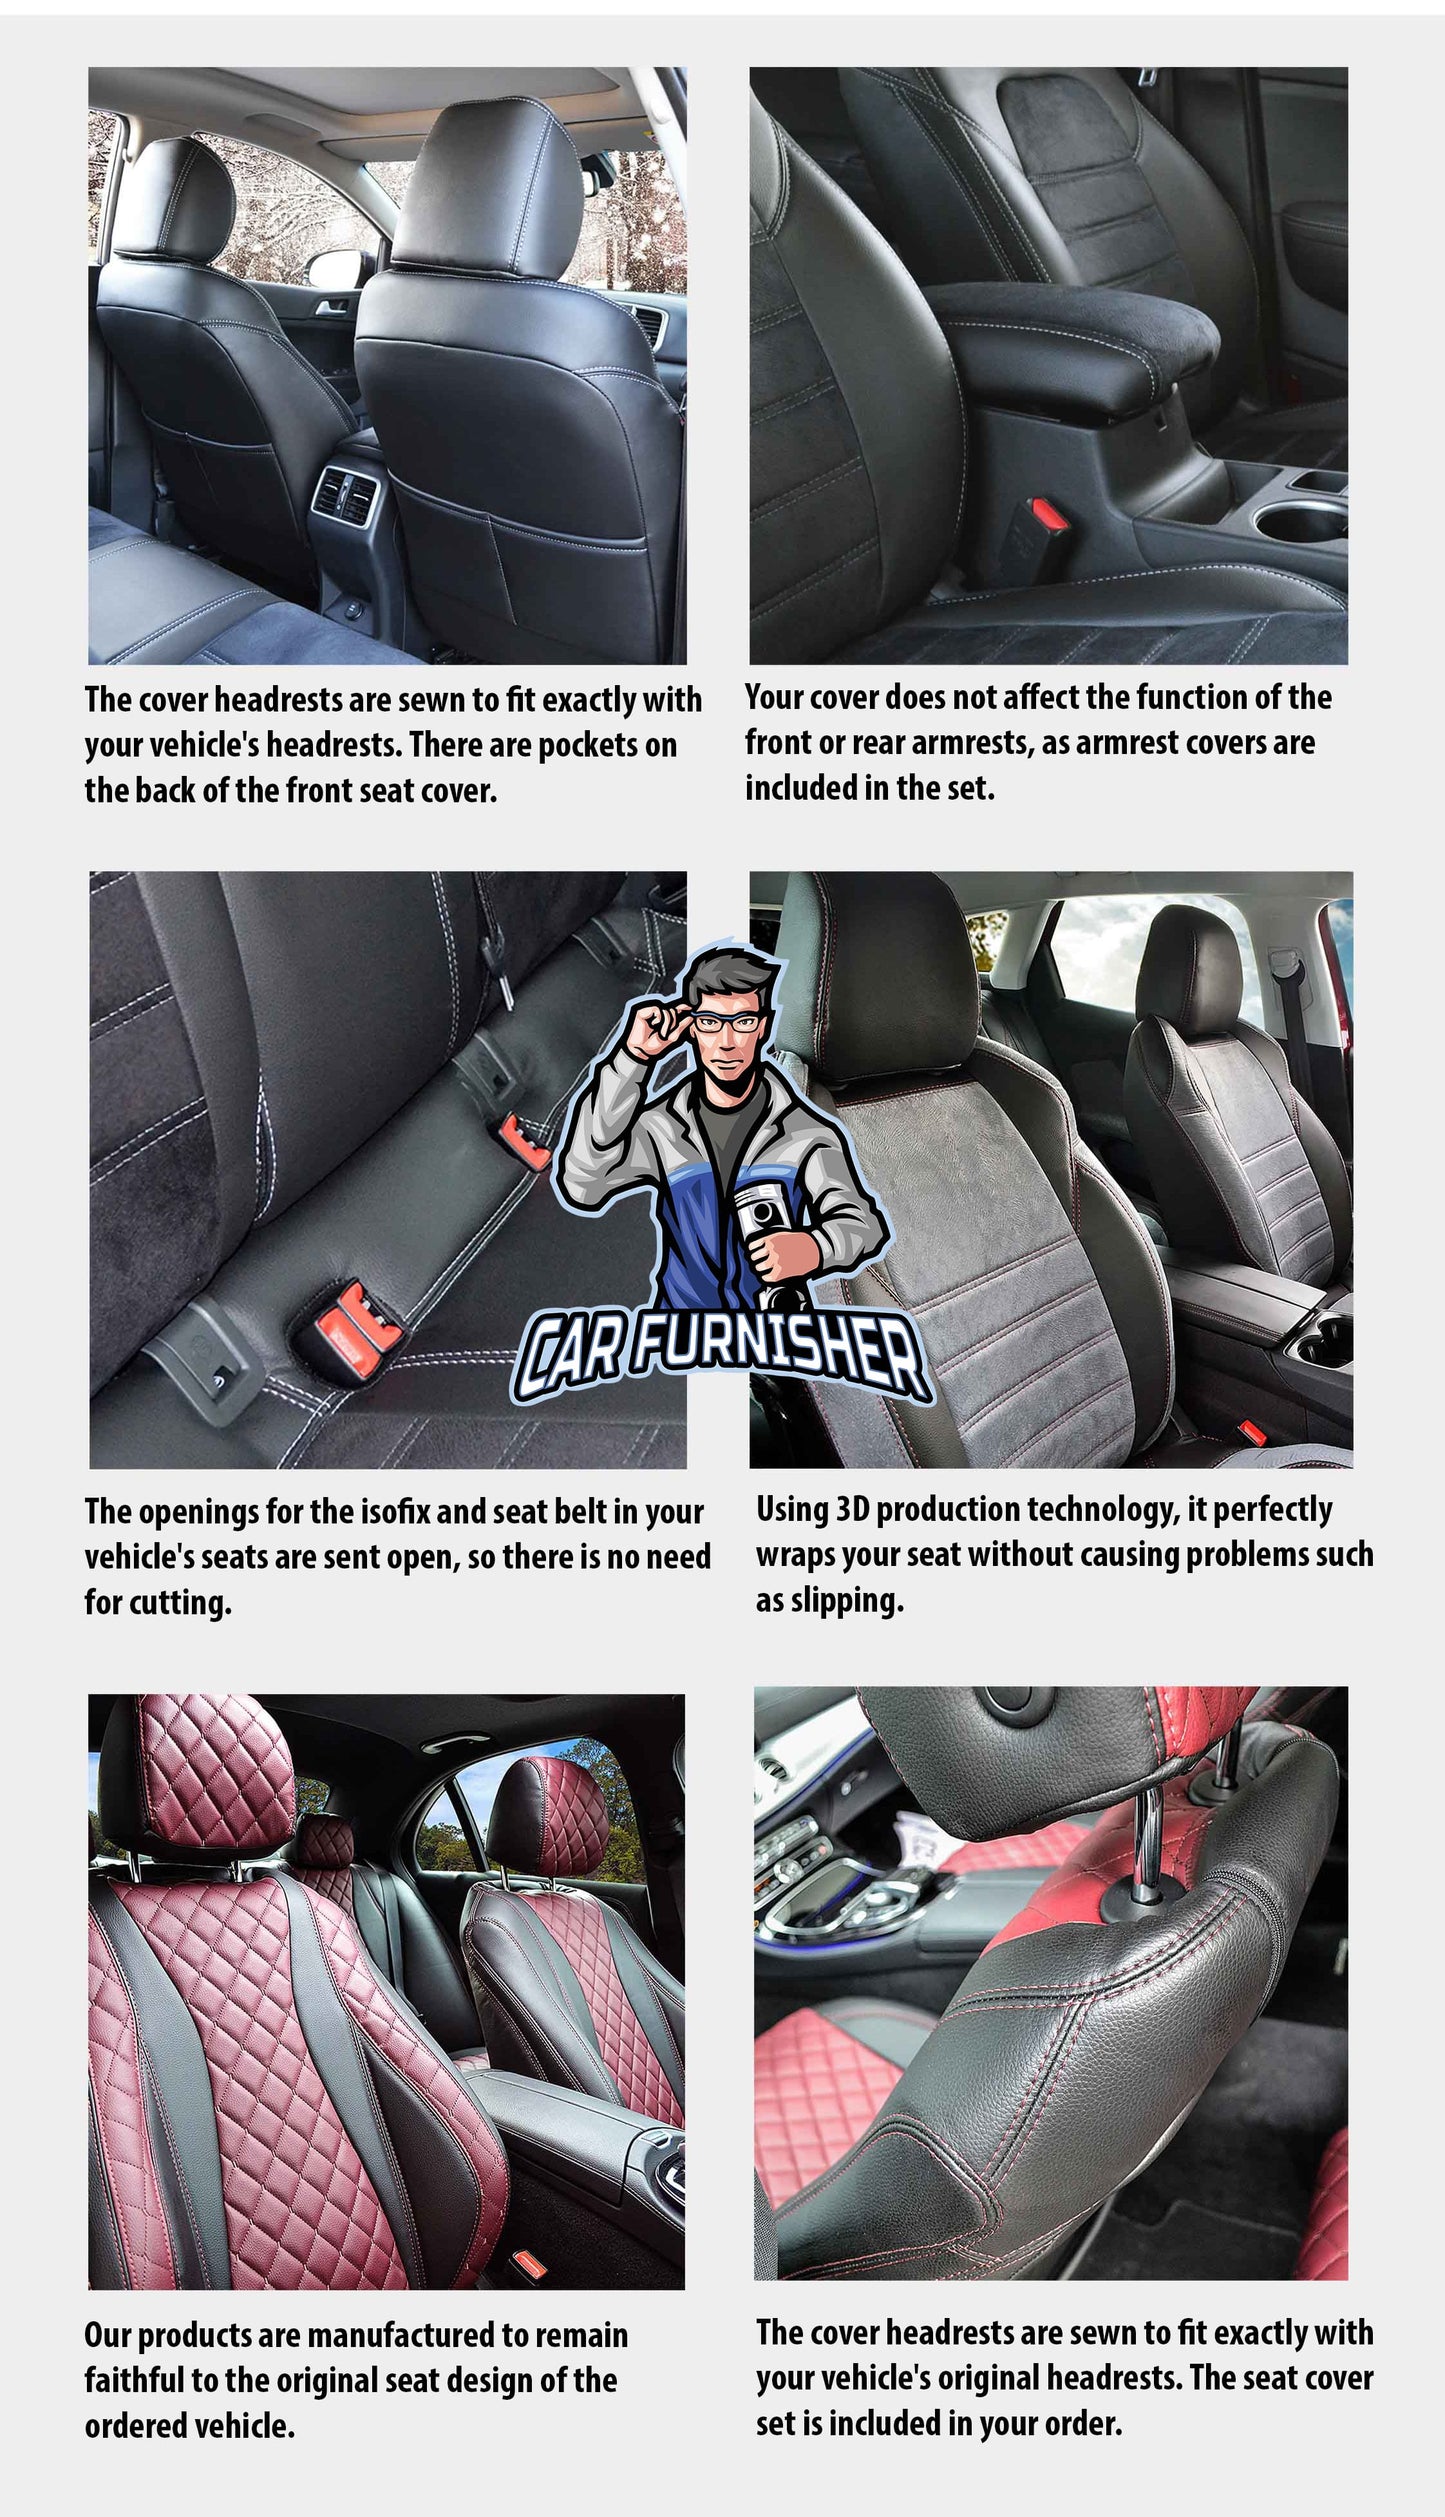 Hyundai Starex Seat Covers Milano Suede Design Black Leather & Suede Fabric